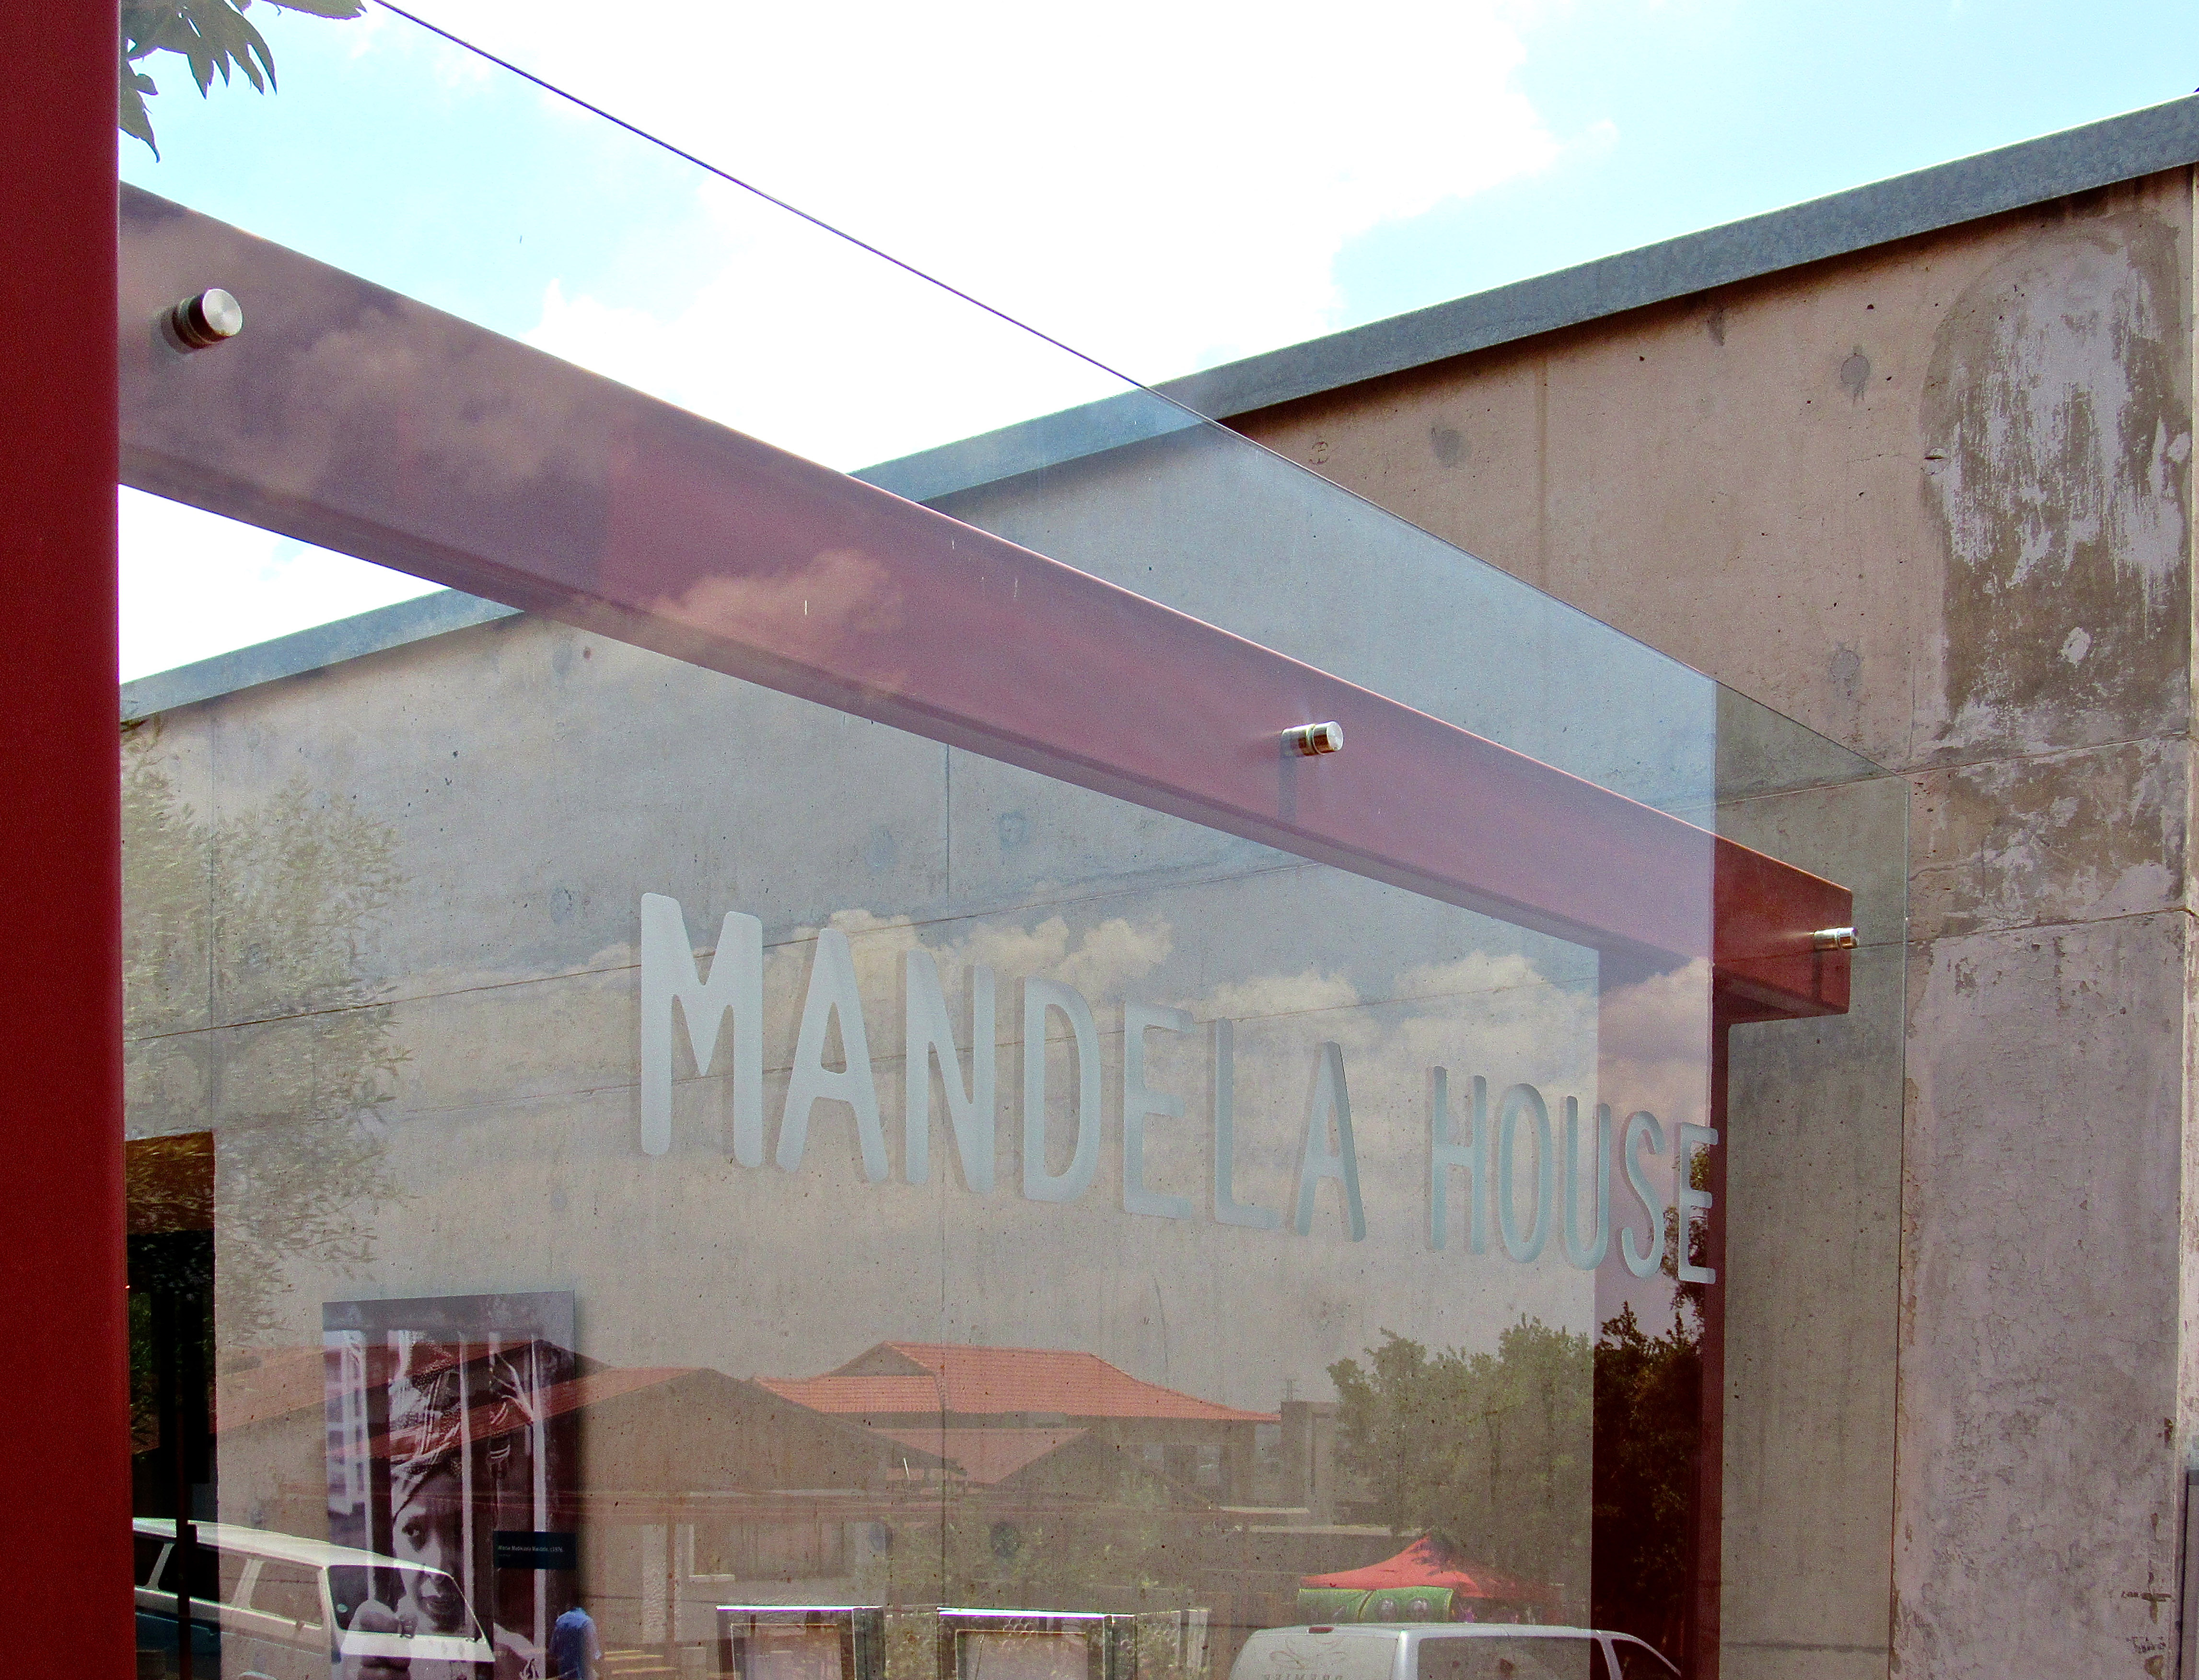 Wilson Mandelas House